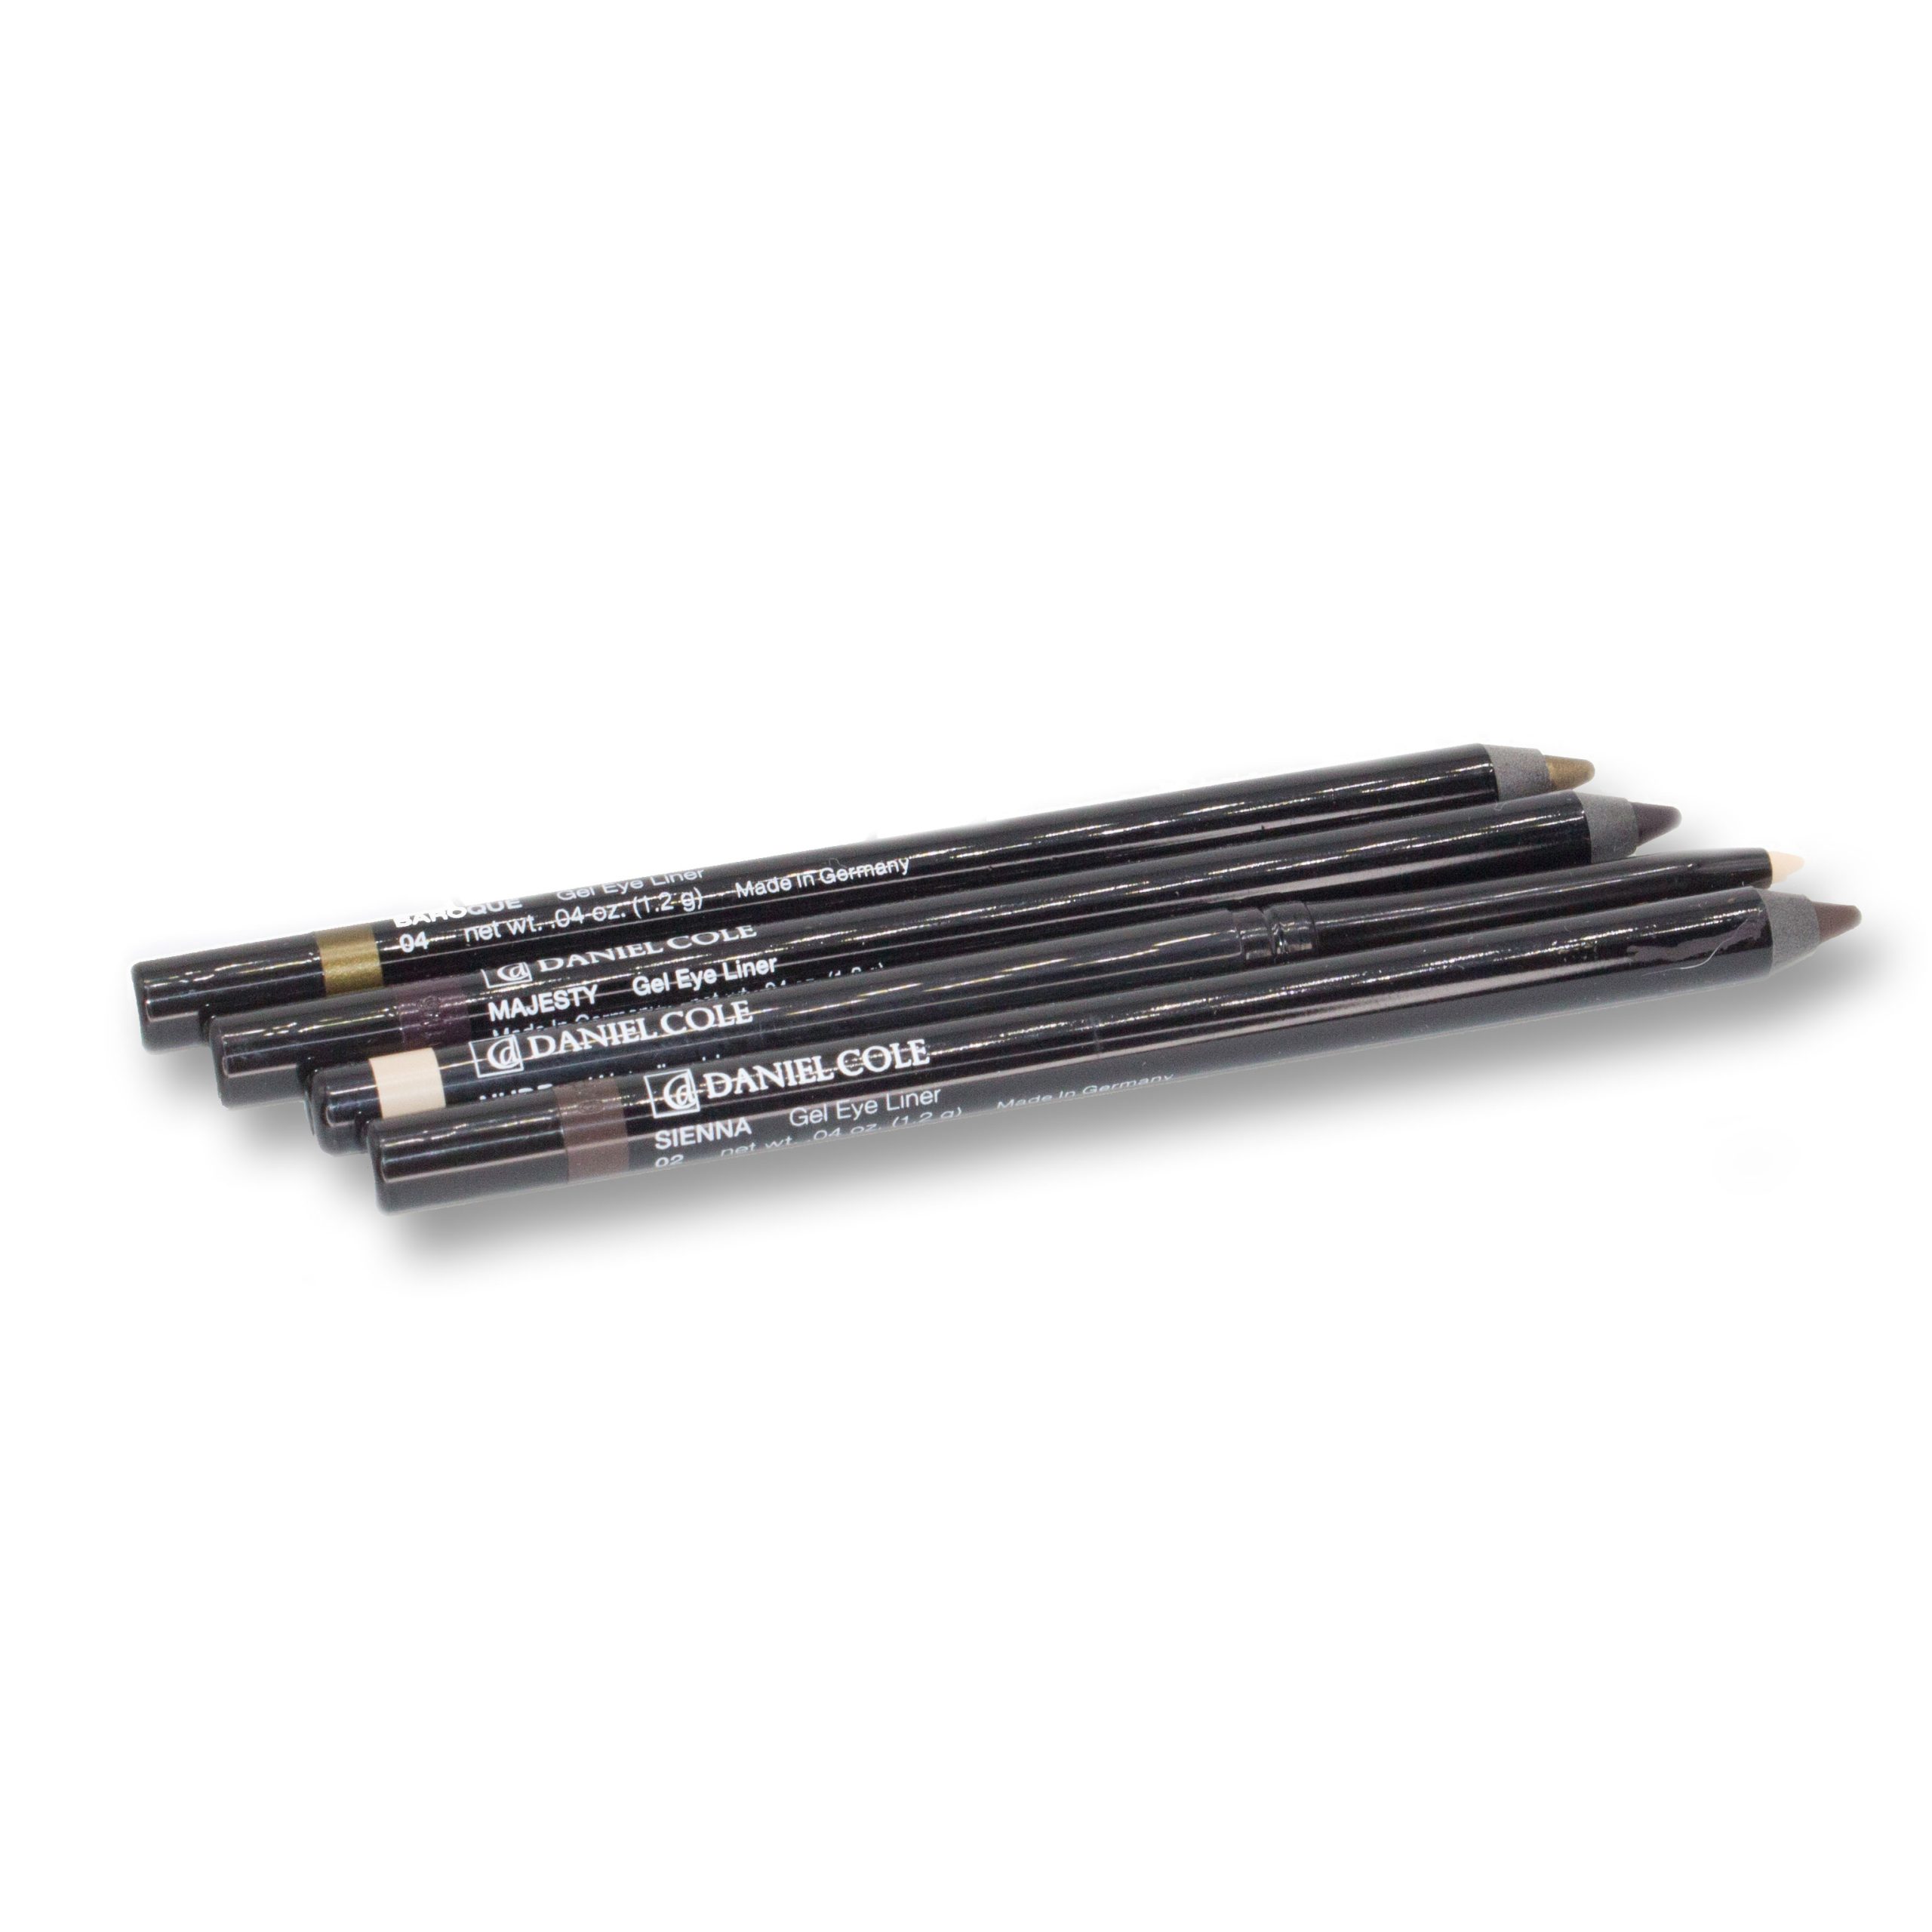 Gel Eye Pencils – Daniel Cole Collection